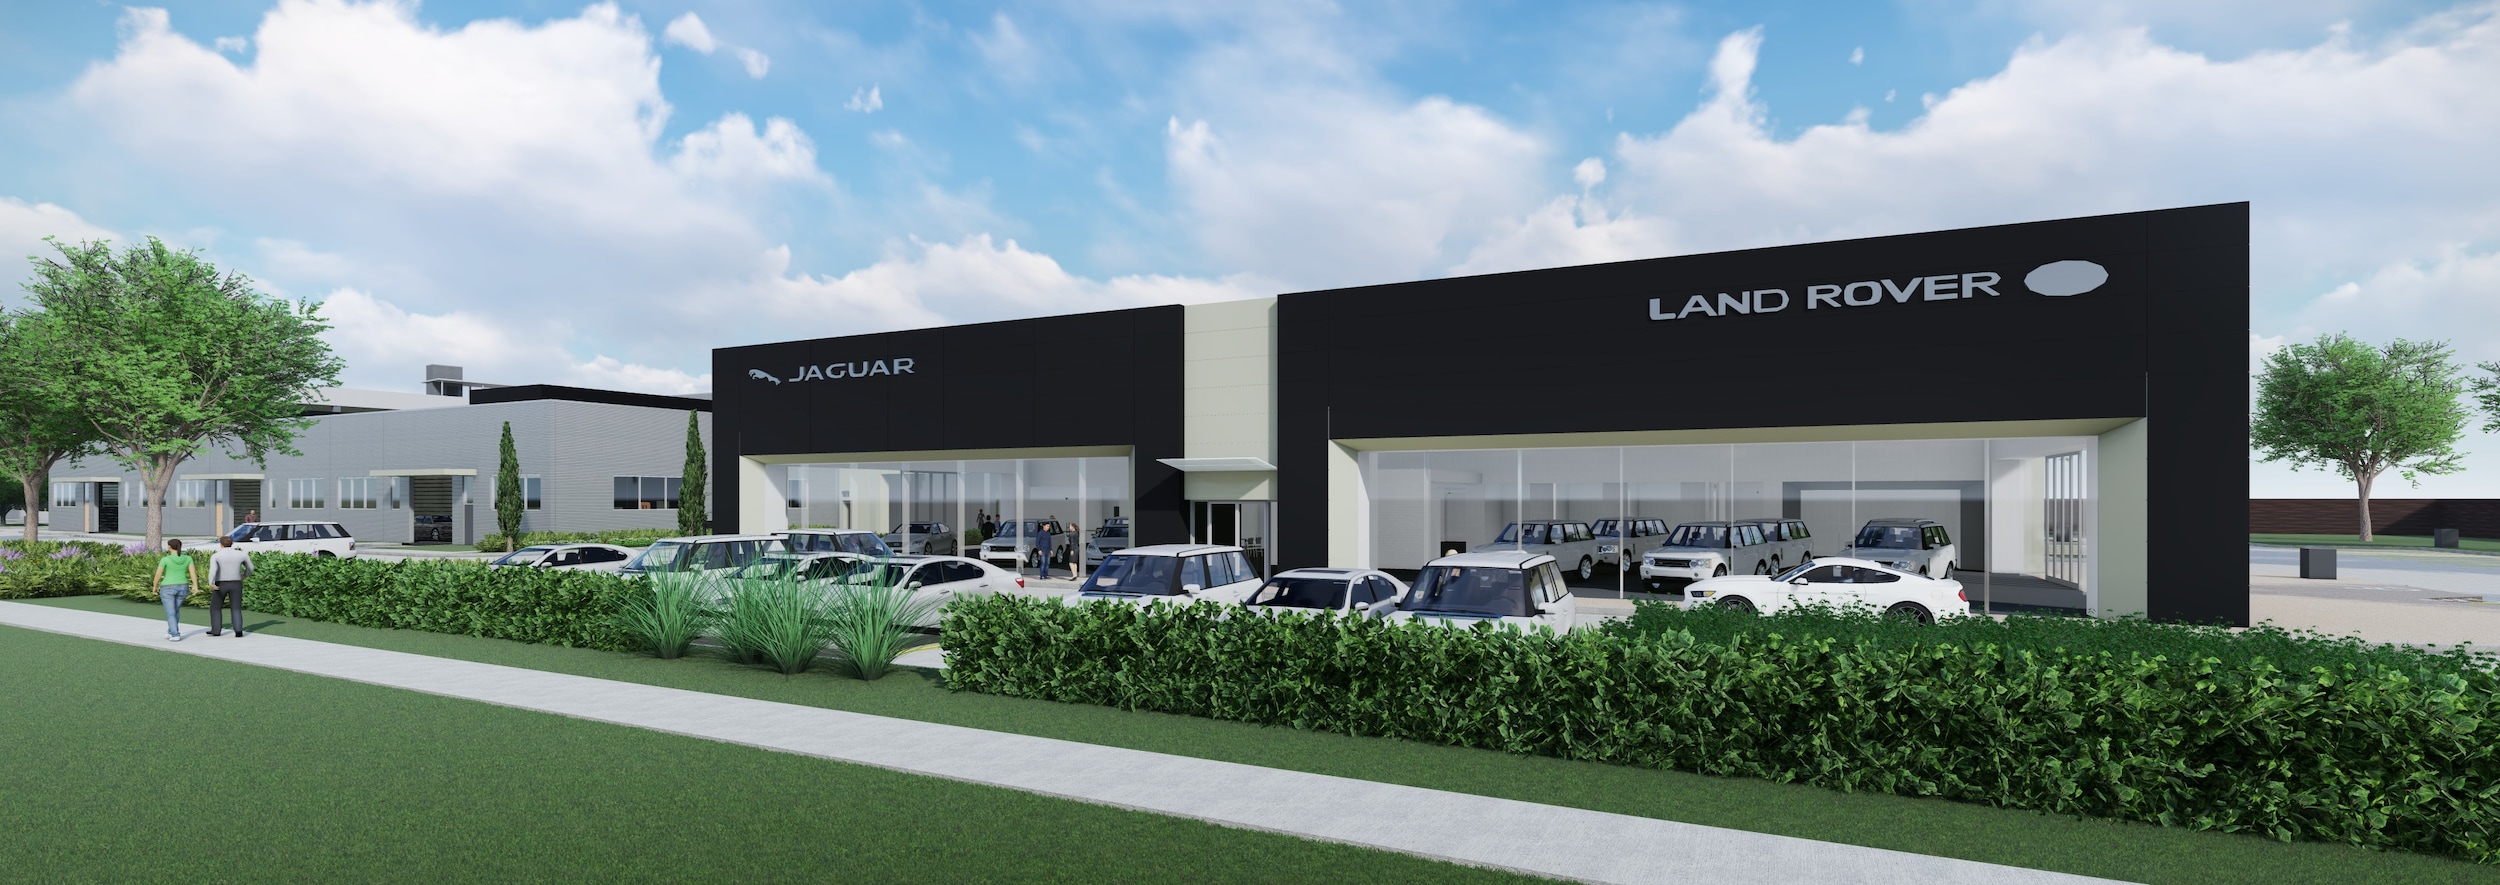 New Jaguar Land Rover Dealership Opening 2020 in Austin TX - Park Place